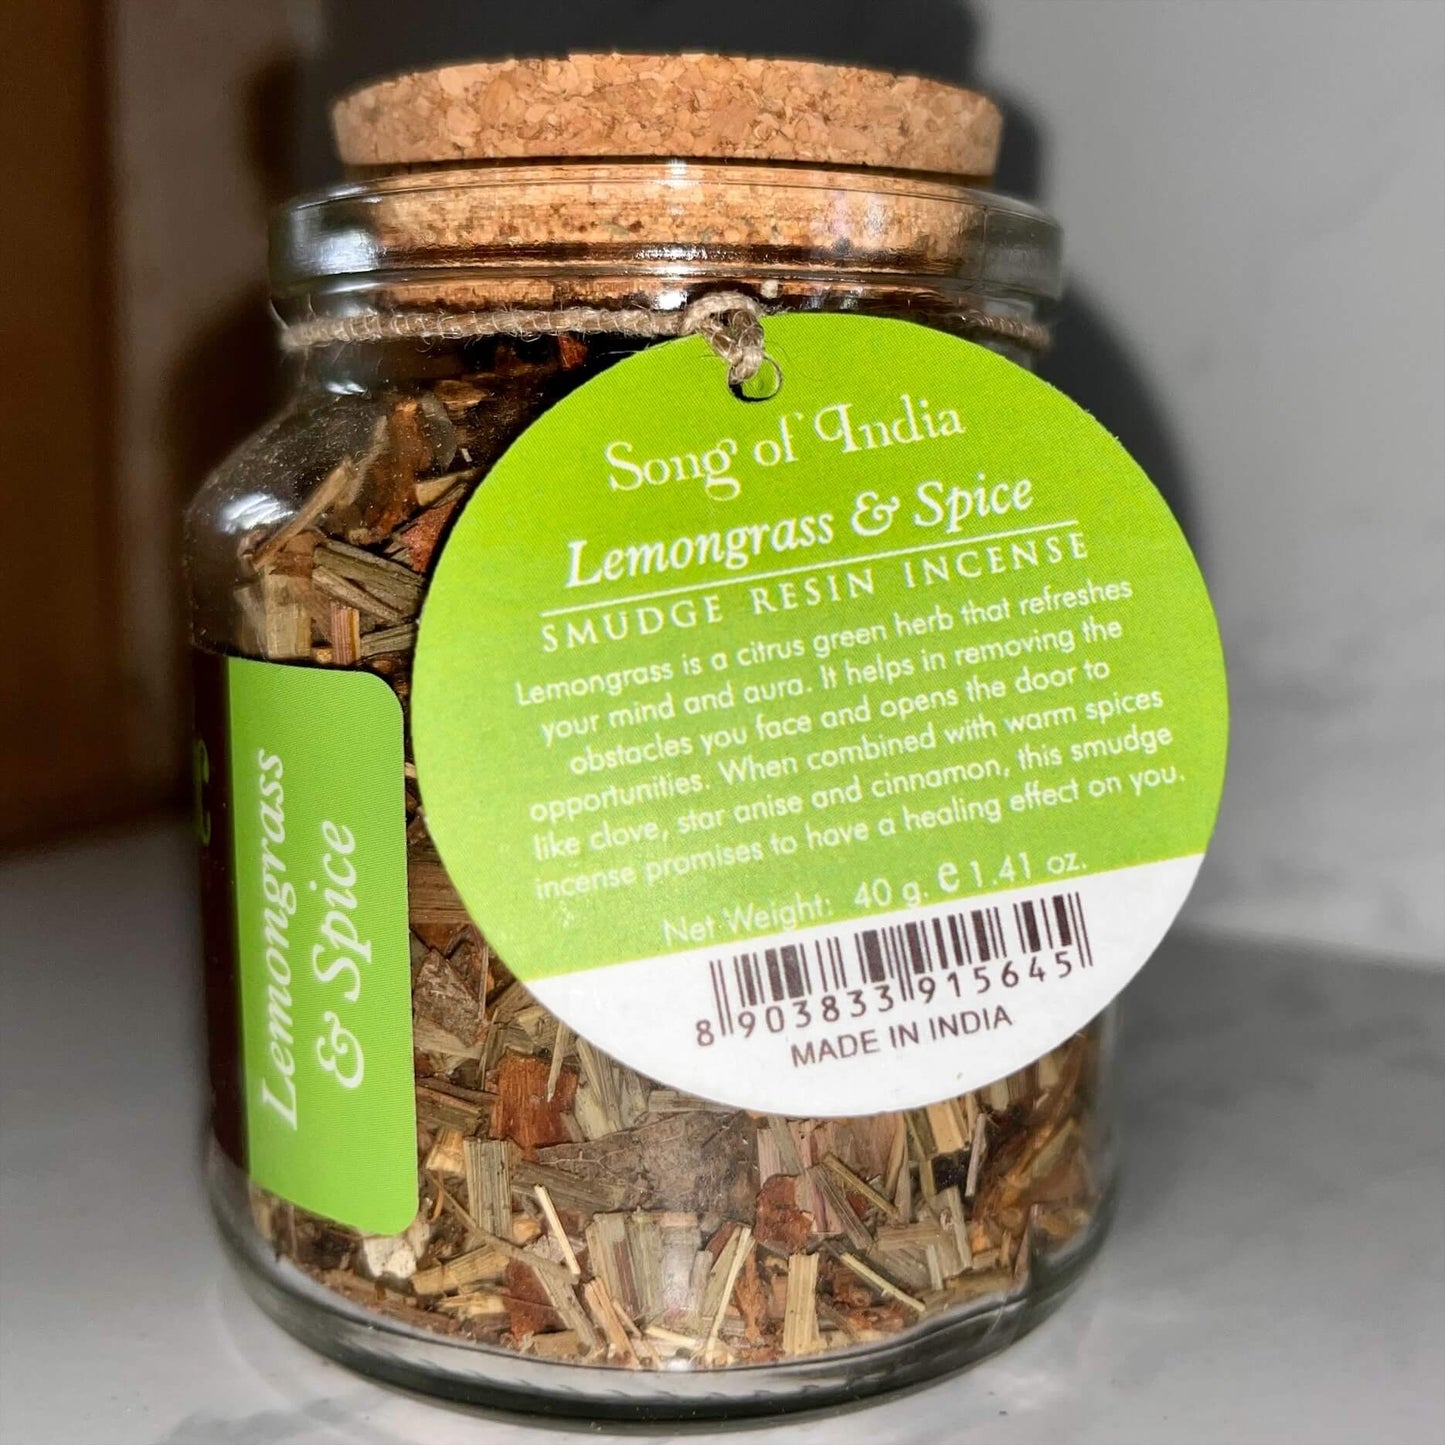 Organic Goodness Smudge Resin LEMONGRASS SPICE 80g Jar